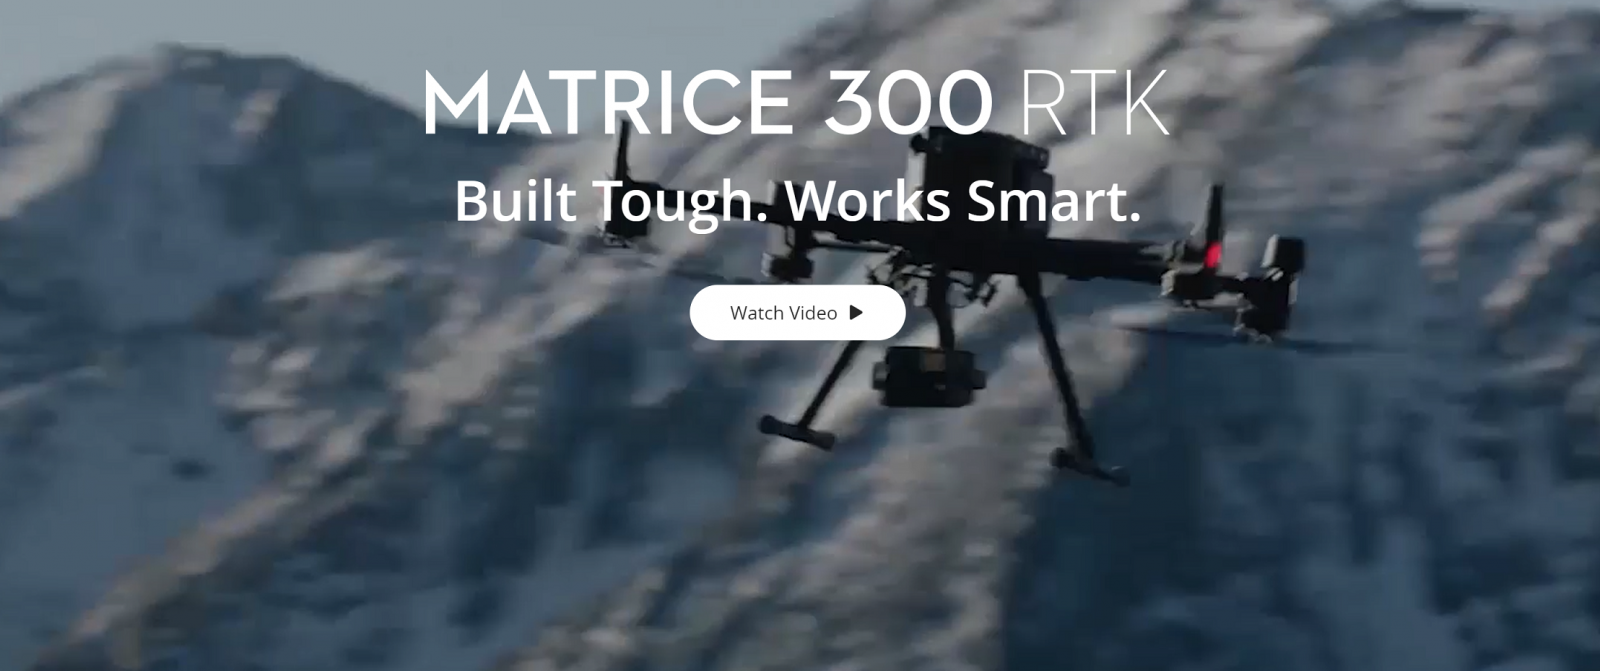 Matrice 300 RTK - Built Tough. Works Smart.